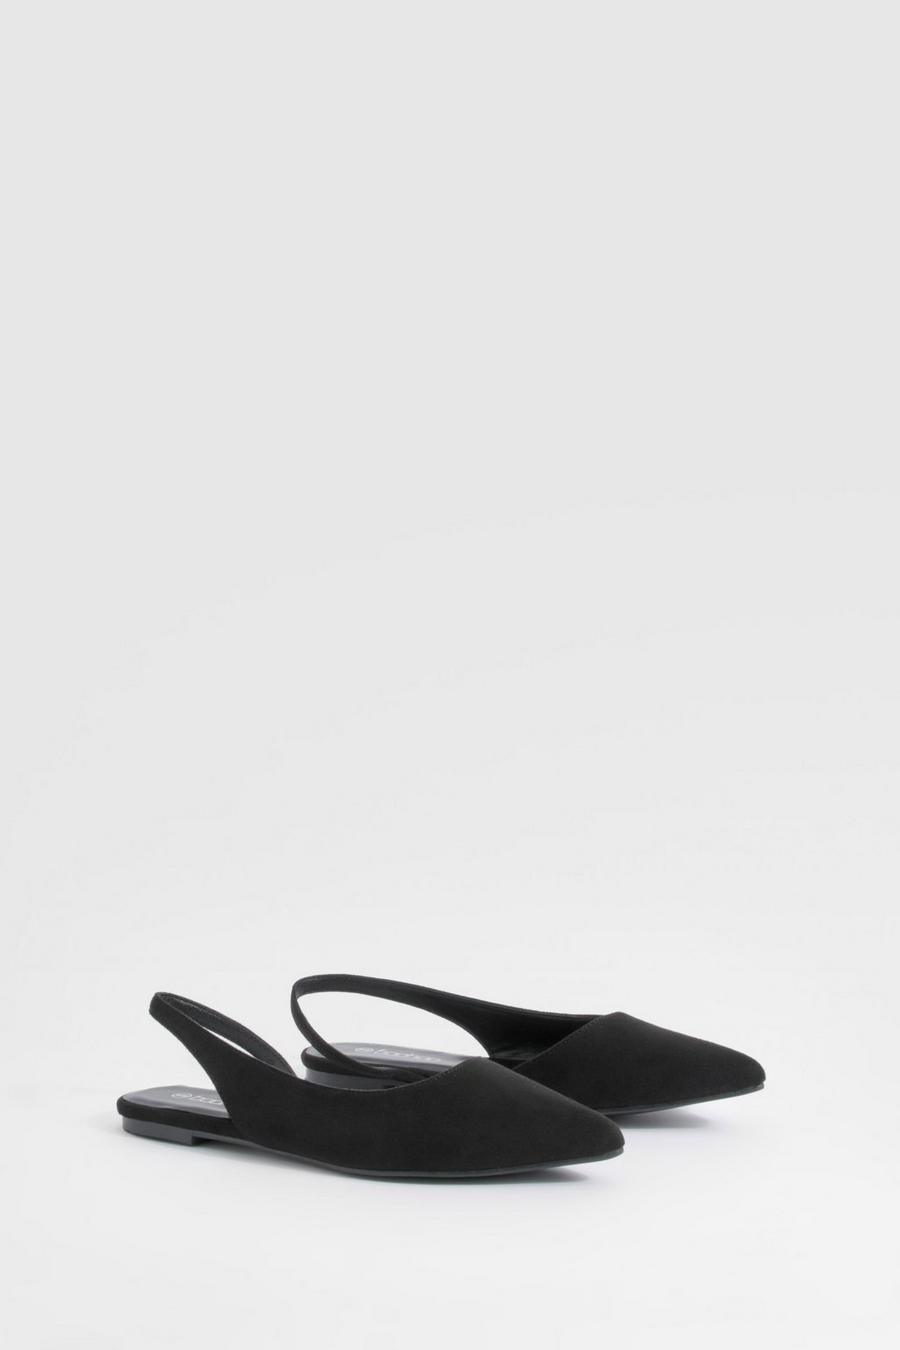 Chaussures plates pointues en faux daim, Black image number 1